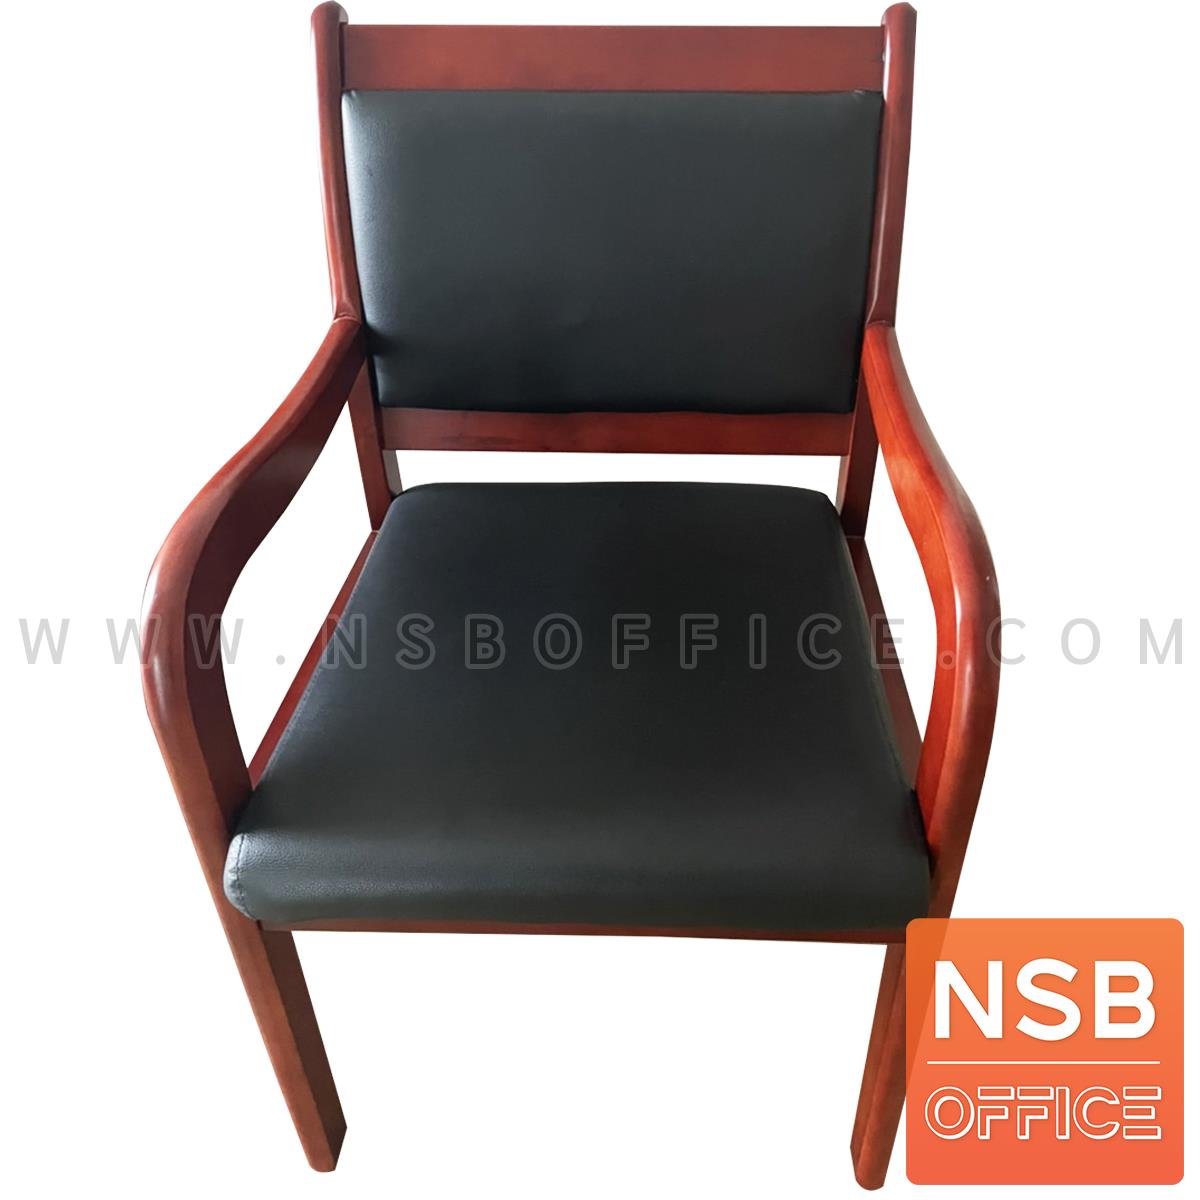 B29A415:เก้าอี้โมเดิร์นหนังเทียม รุ่น Roper (โรเปอร์) ขนาด 56W cm. โครงไม้